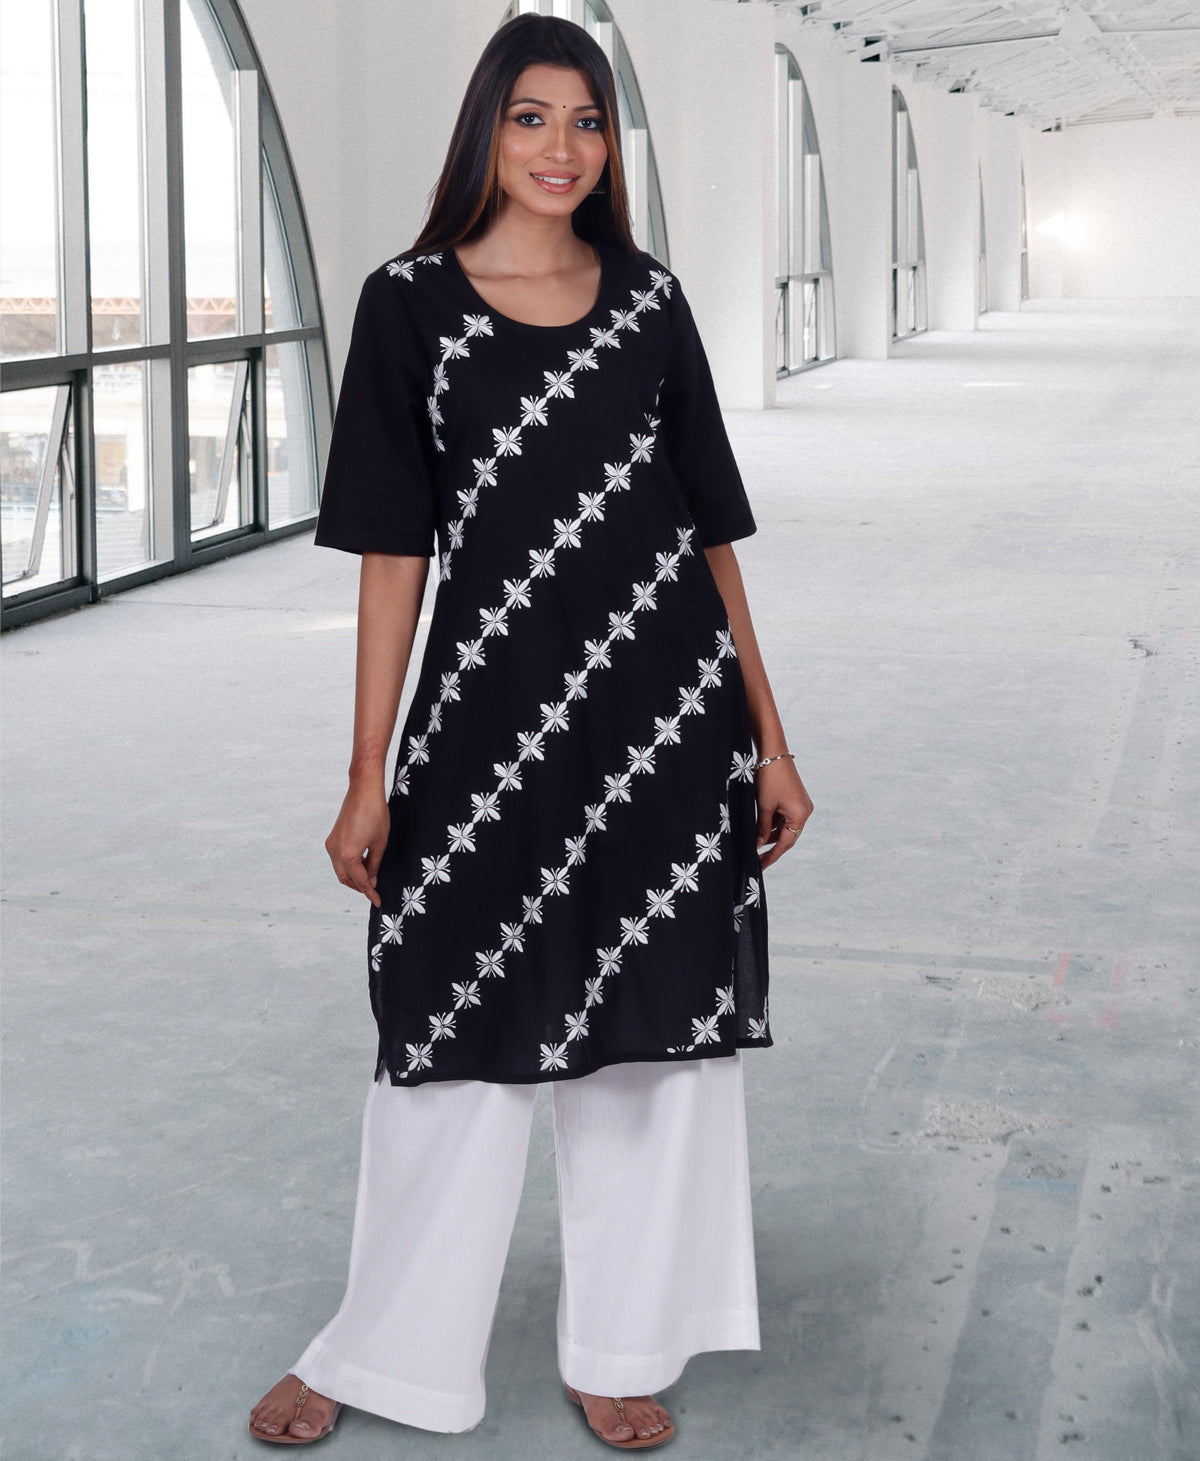 BHAMA Pure Cotton Hand Embroidered Tunic Dress Kurta: Made to Order/Customizable